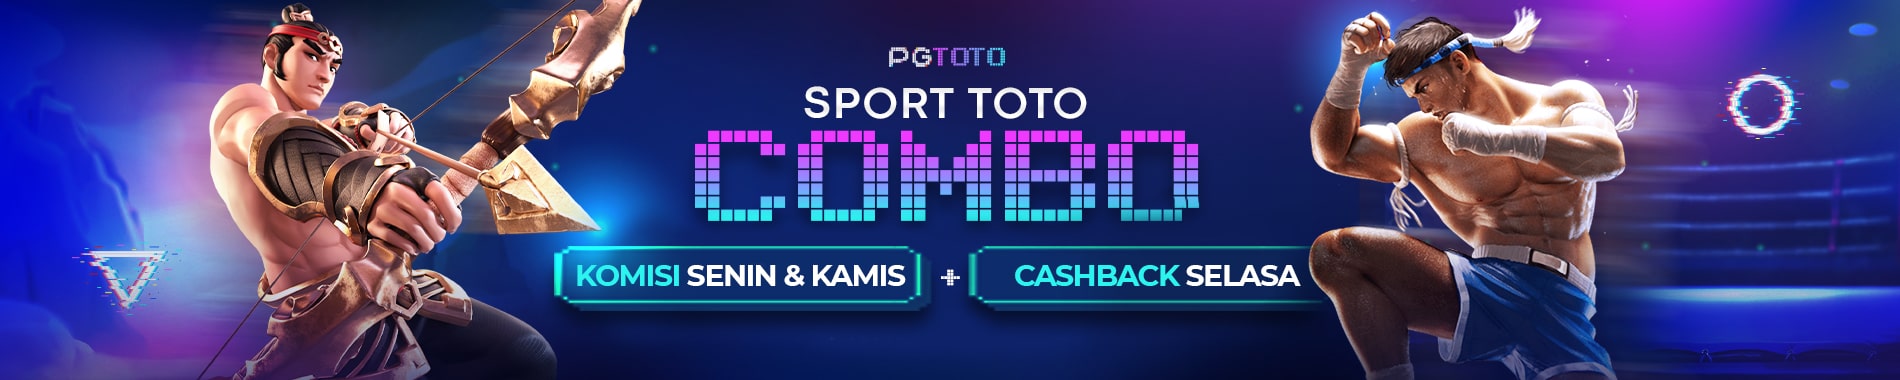 PGTOTO - Promo Sportsbook Cashback